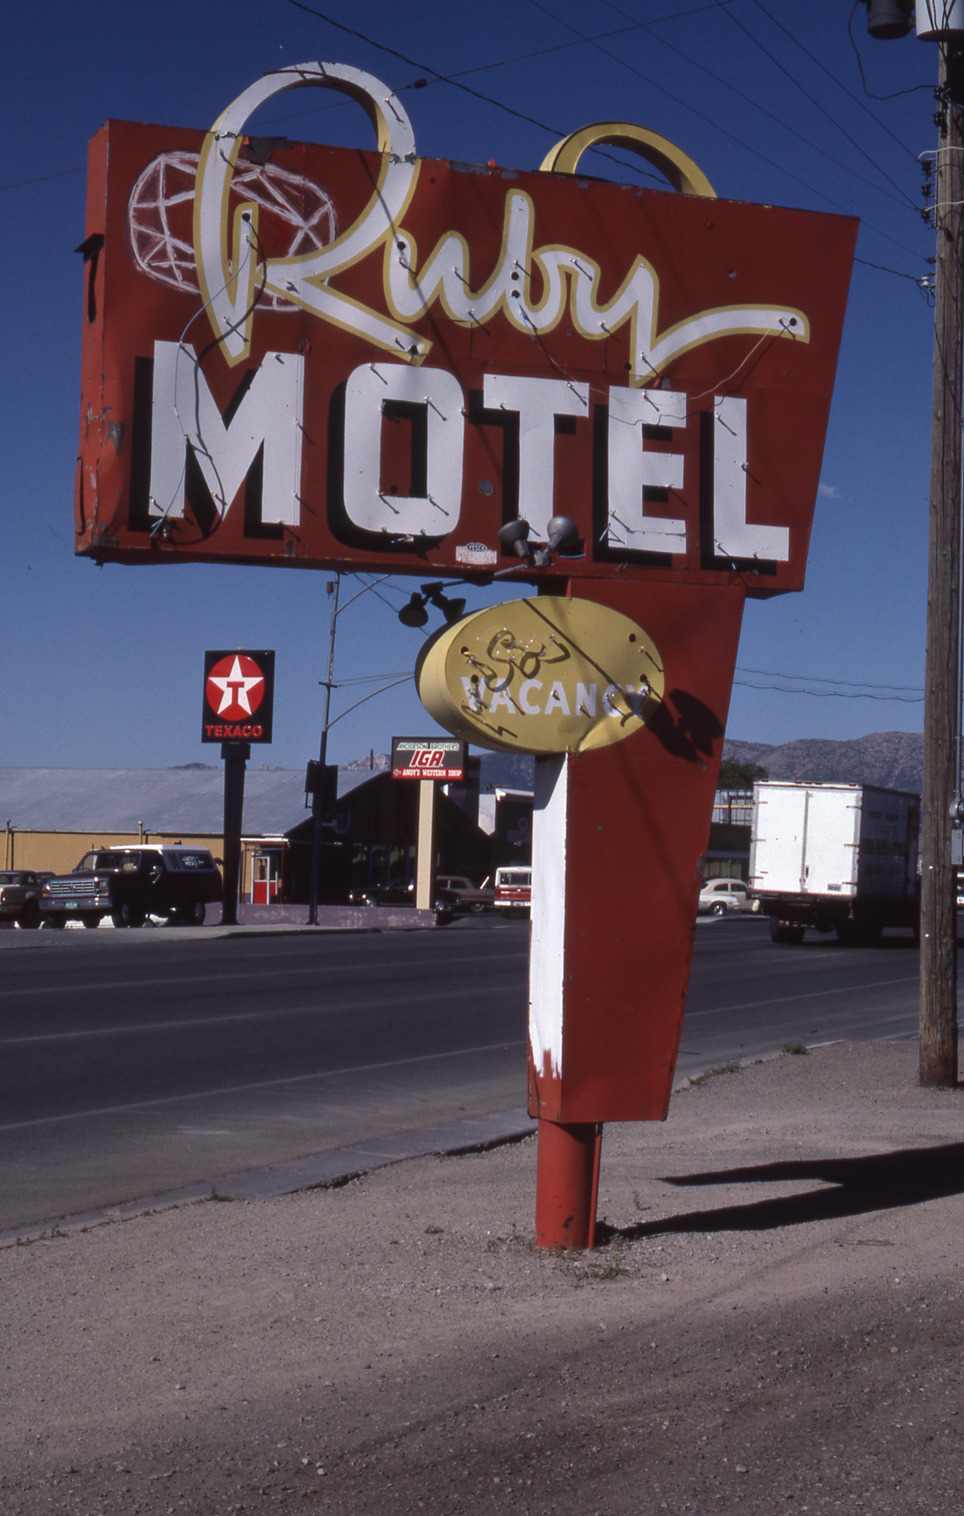 Ruby Motel pylon sign, Ely, Nevada: photographic print